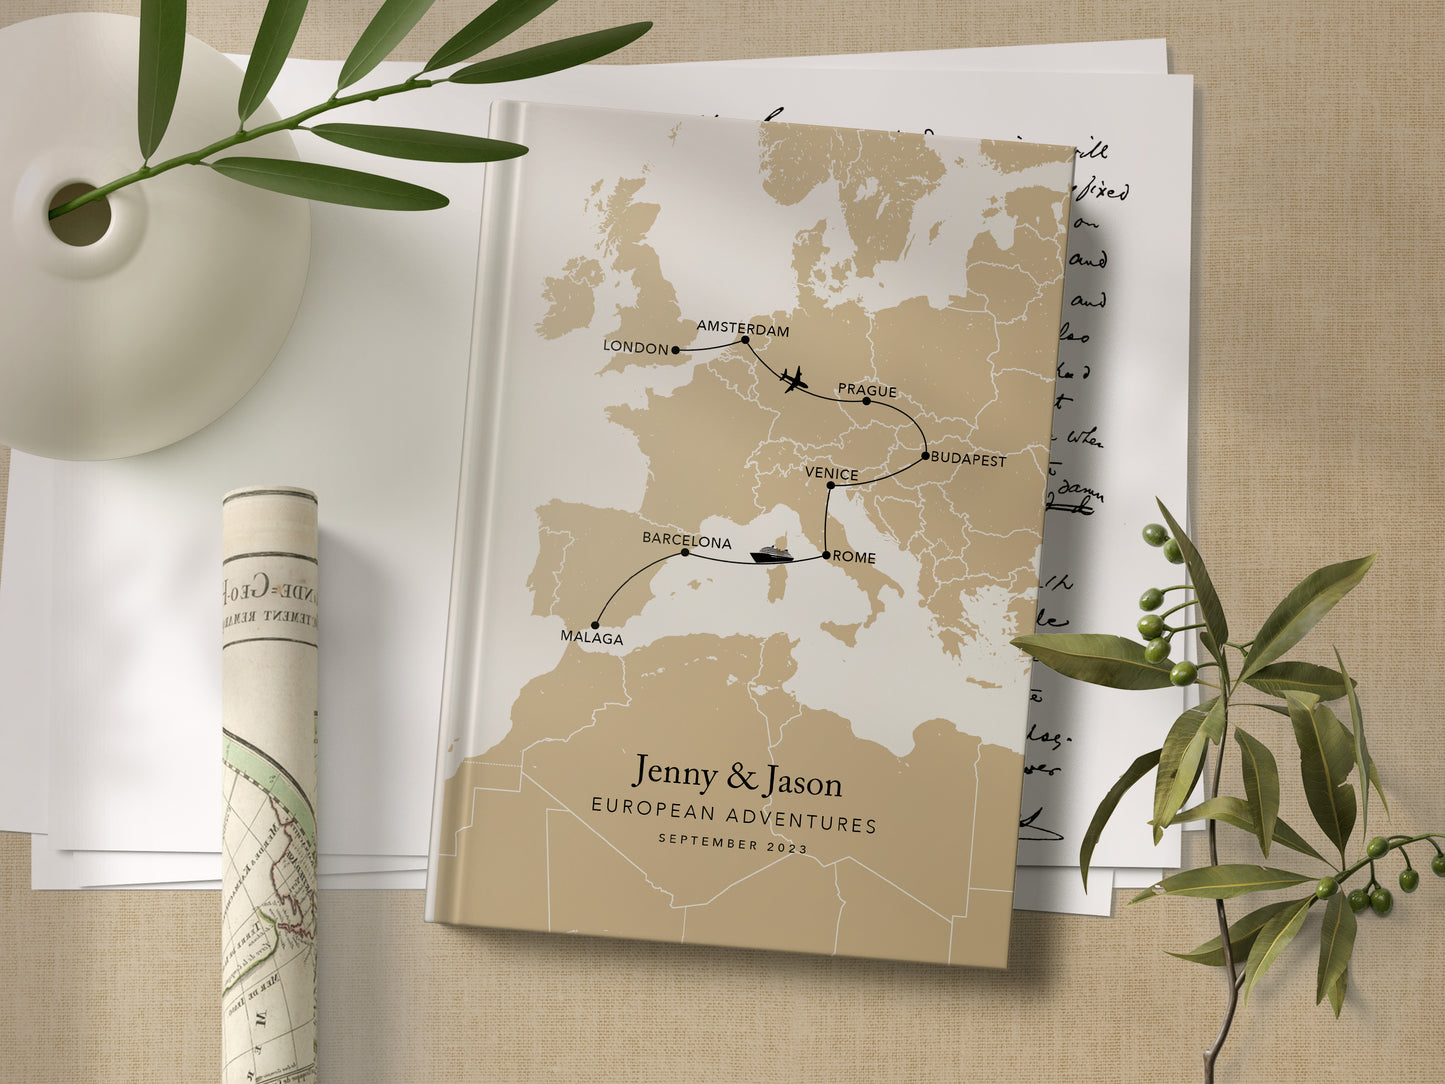 Custom Map Europe Personalised Travel Journal